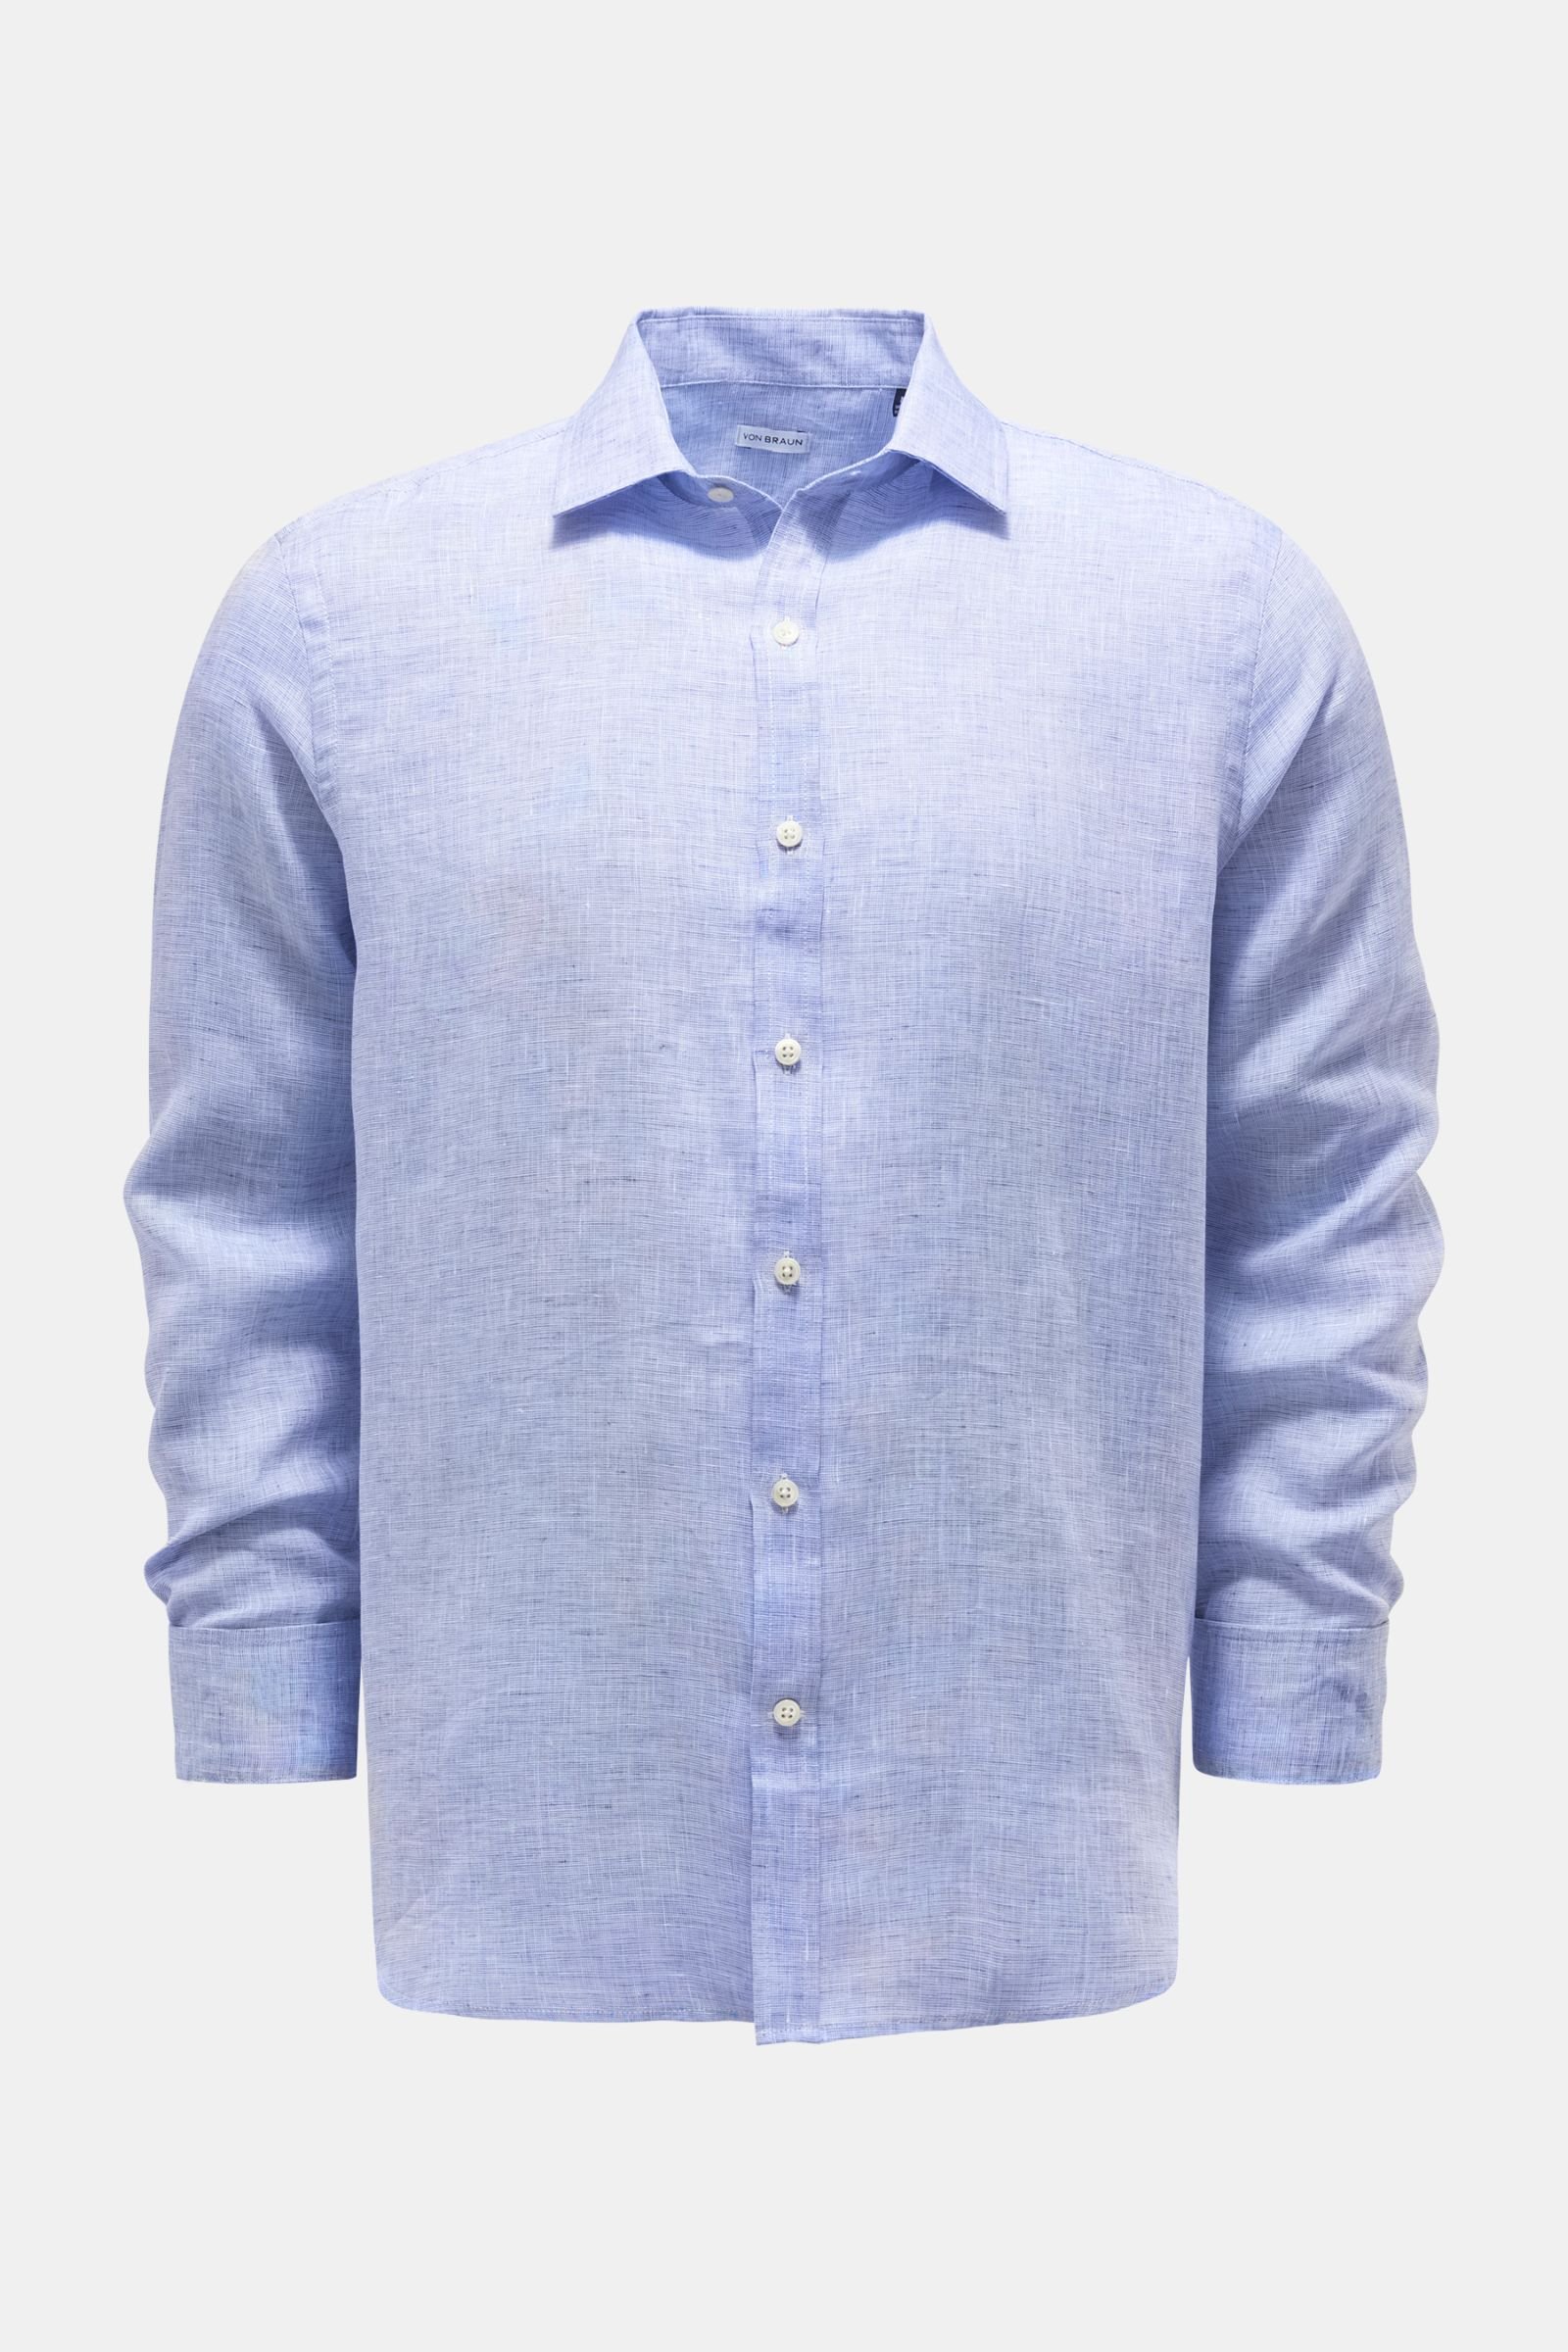 Linen shirt Kent collar blue/white checked